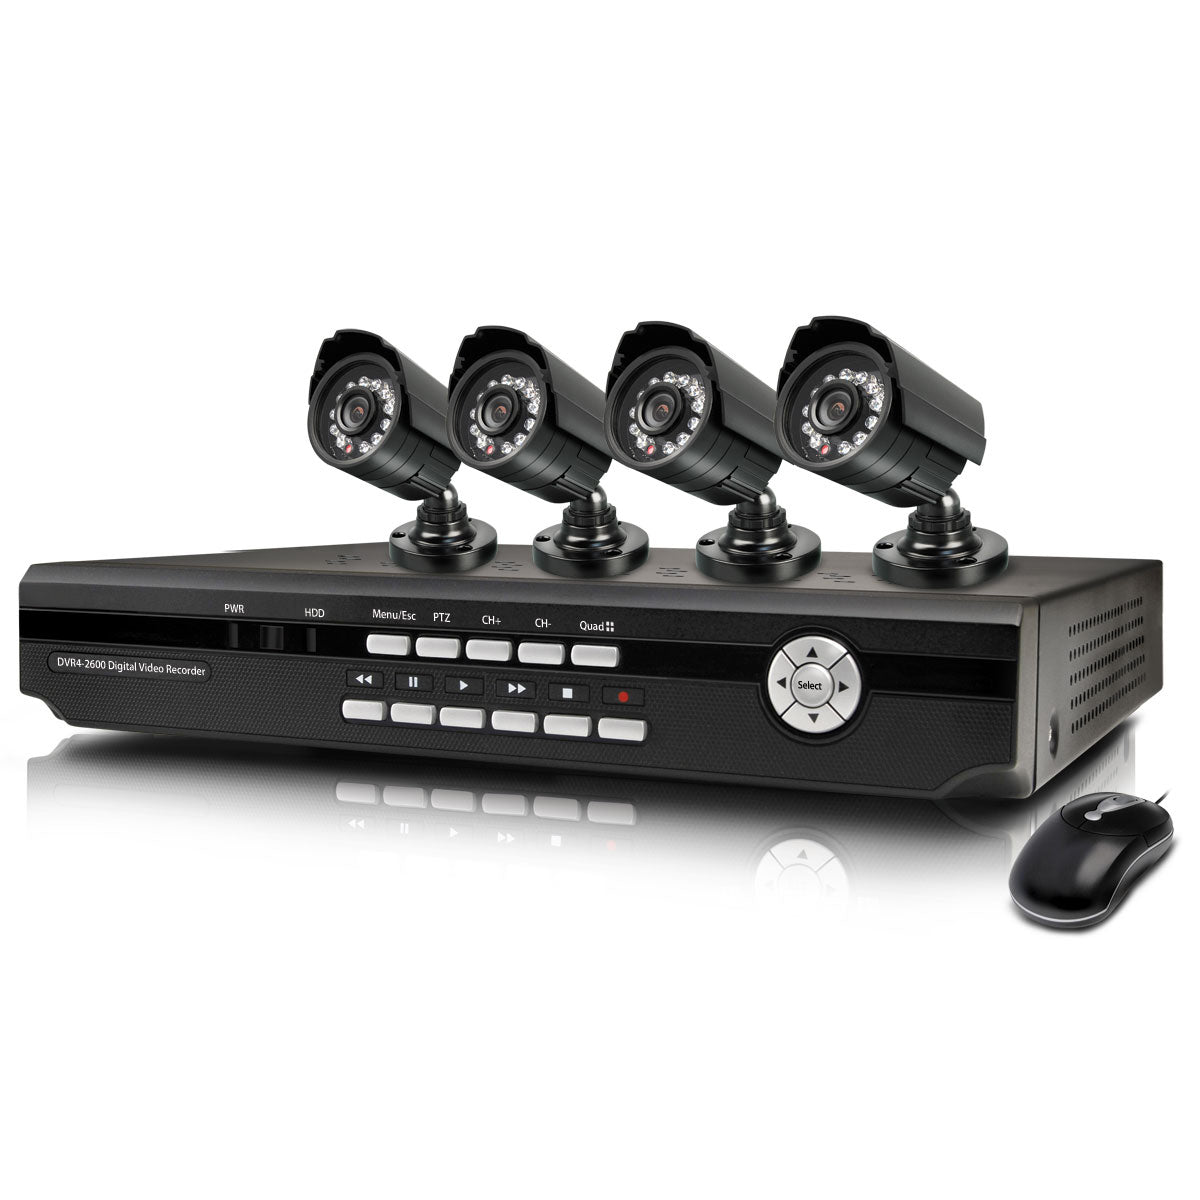 Sistem de Supraveghere si Securitate Video, CCTV 4 Camere, HDMI, Lentile 3,6mm Unghi Larg, Aplicatie Telefon+ Cadou Lampa Led cu Senzor de Miscare